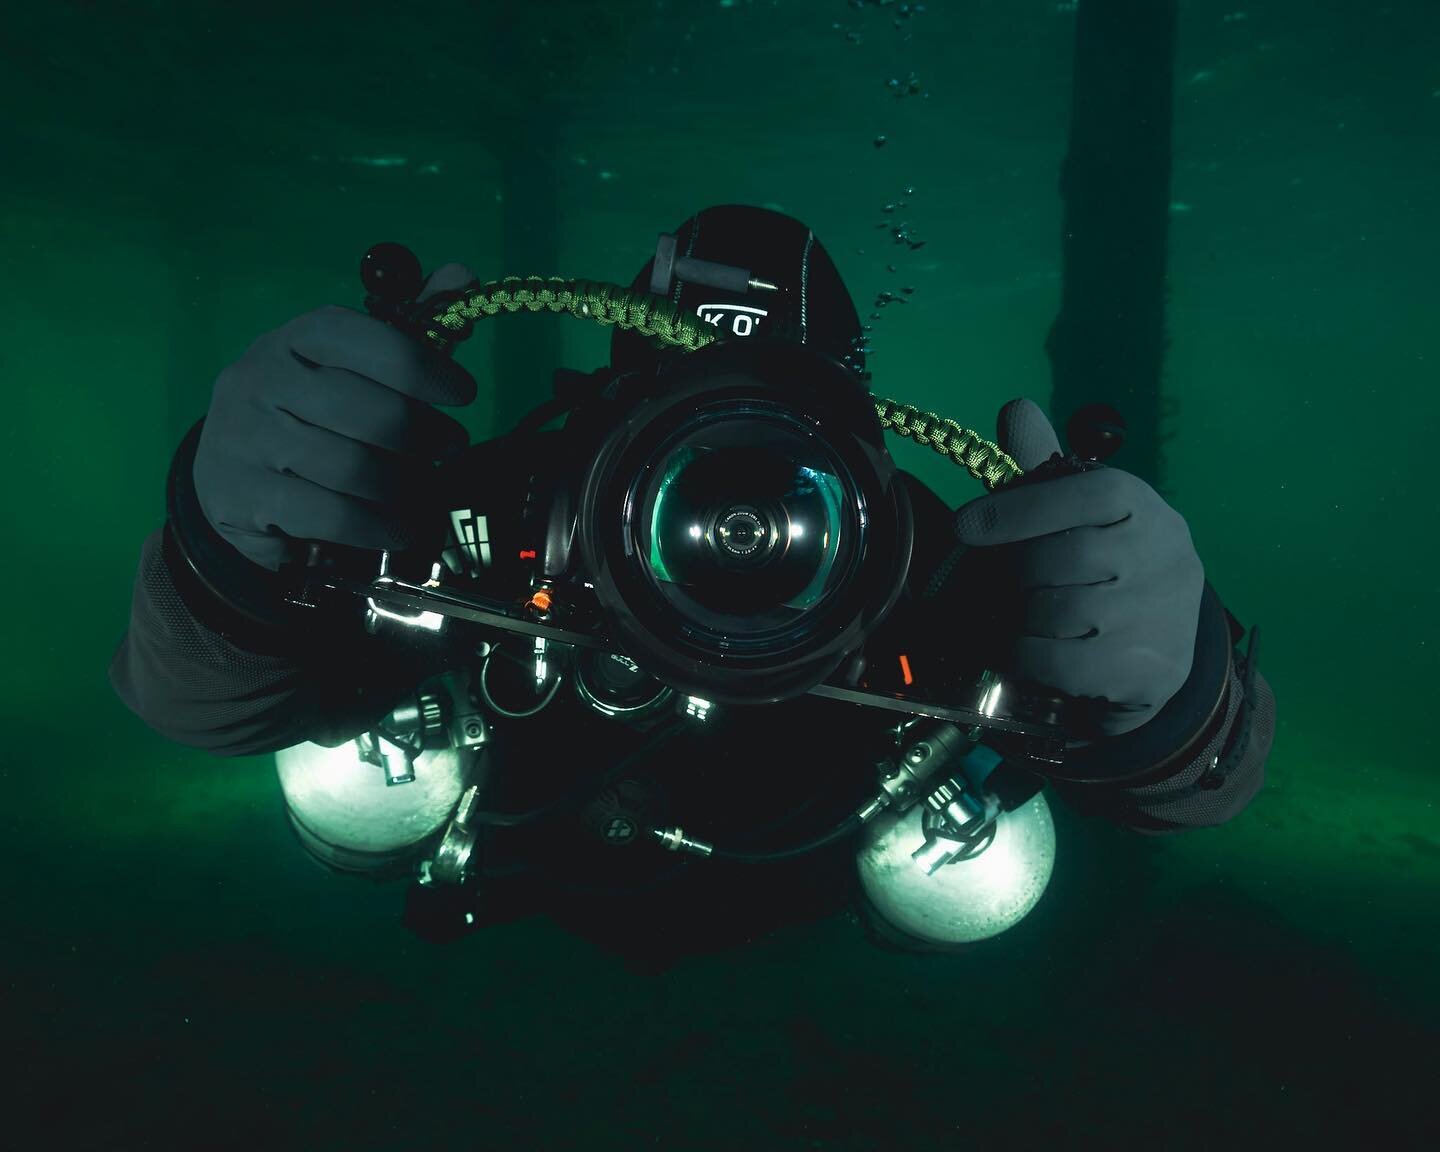 Smiiiiile 📸 &bull;
&bull; 📸: @andrediving 
&bull;
&bull;
&bull;
#photographer #underwaterphotographer #uwphotography #uwphoto #uwphotographer #underwater #photographylover #diver #diving #scuba #scubadiving #scubadiver #scubalife #scubaphoto #uwcam